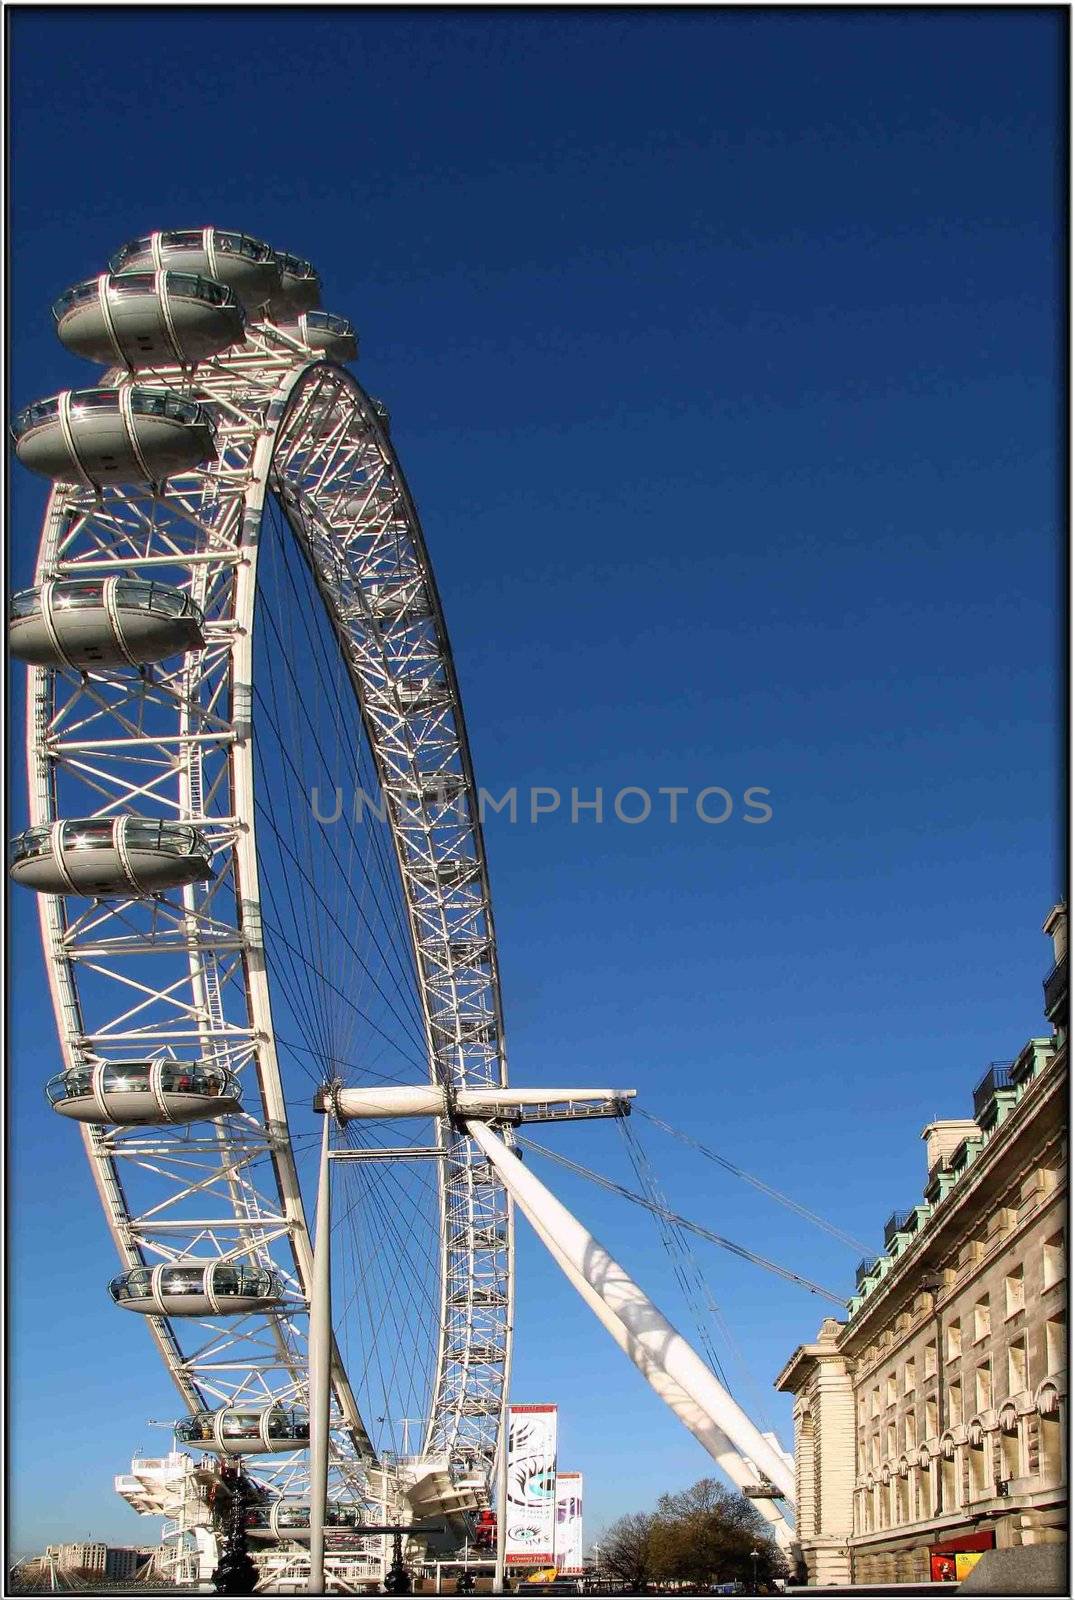 London Eye by Imagecom